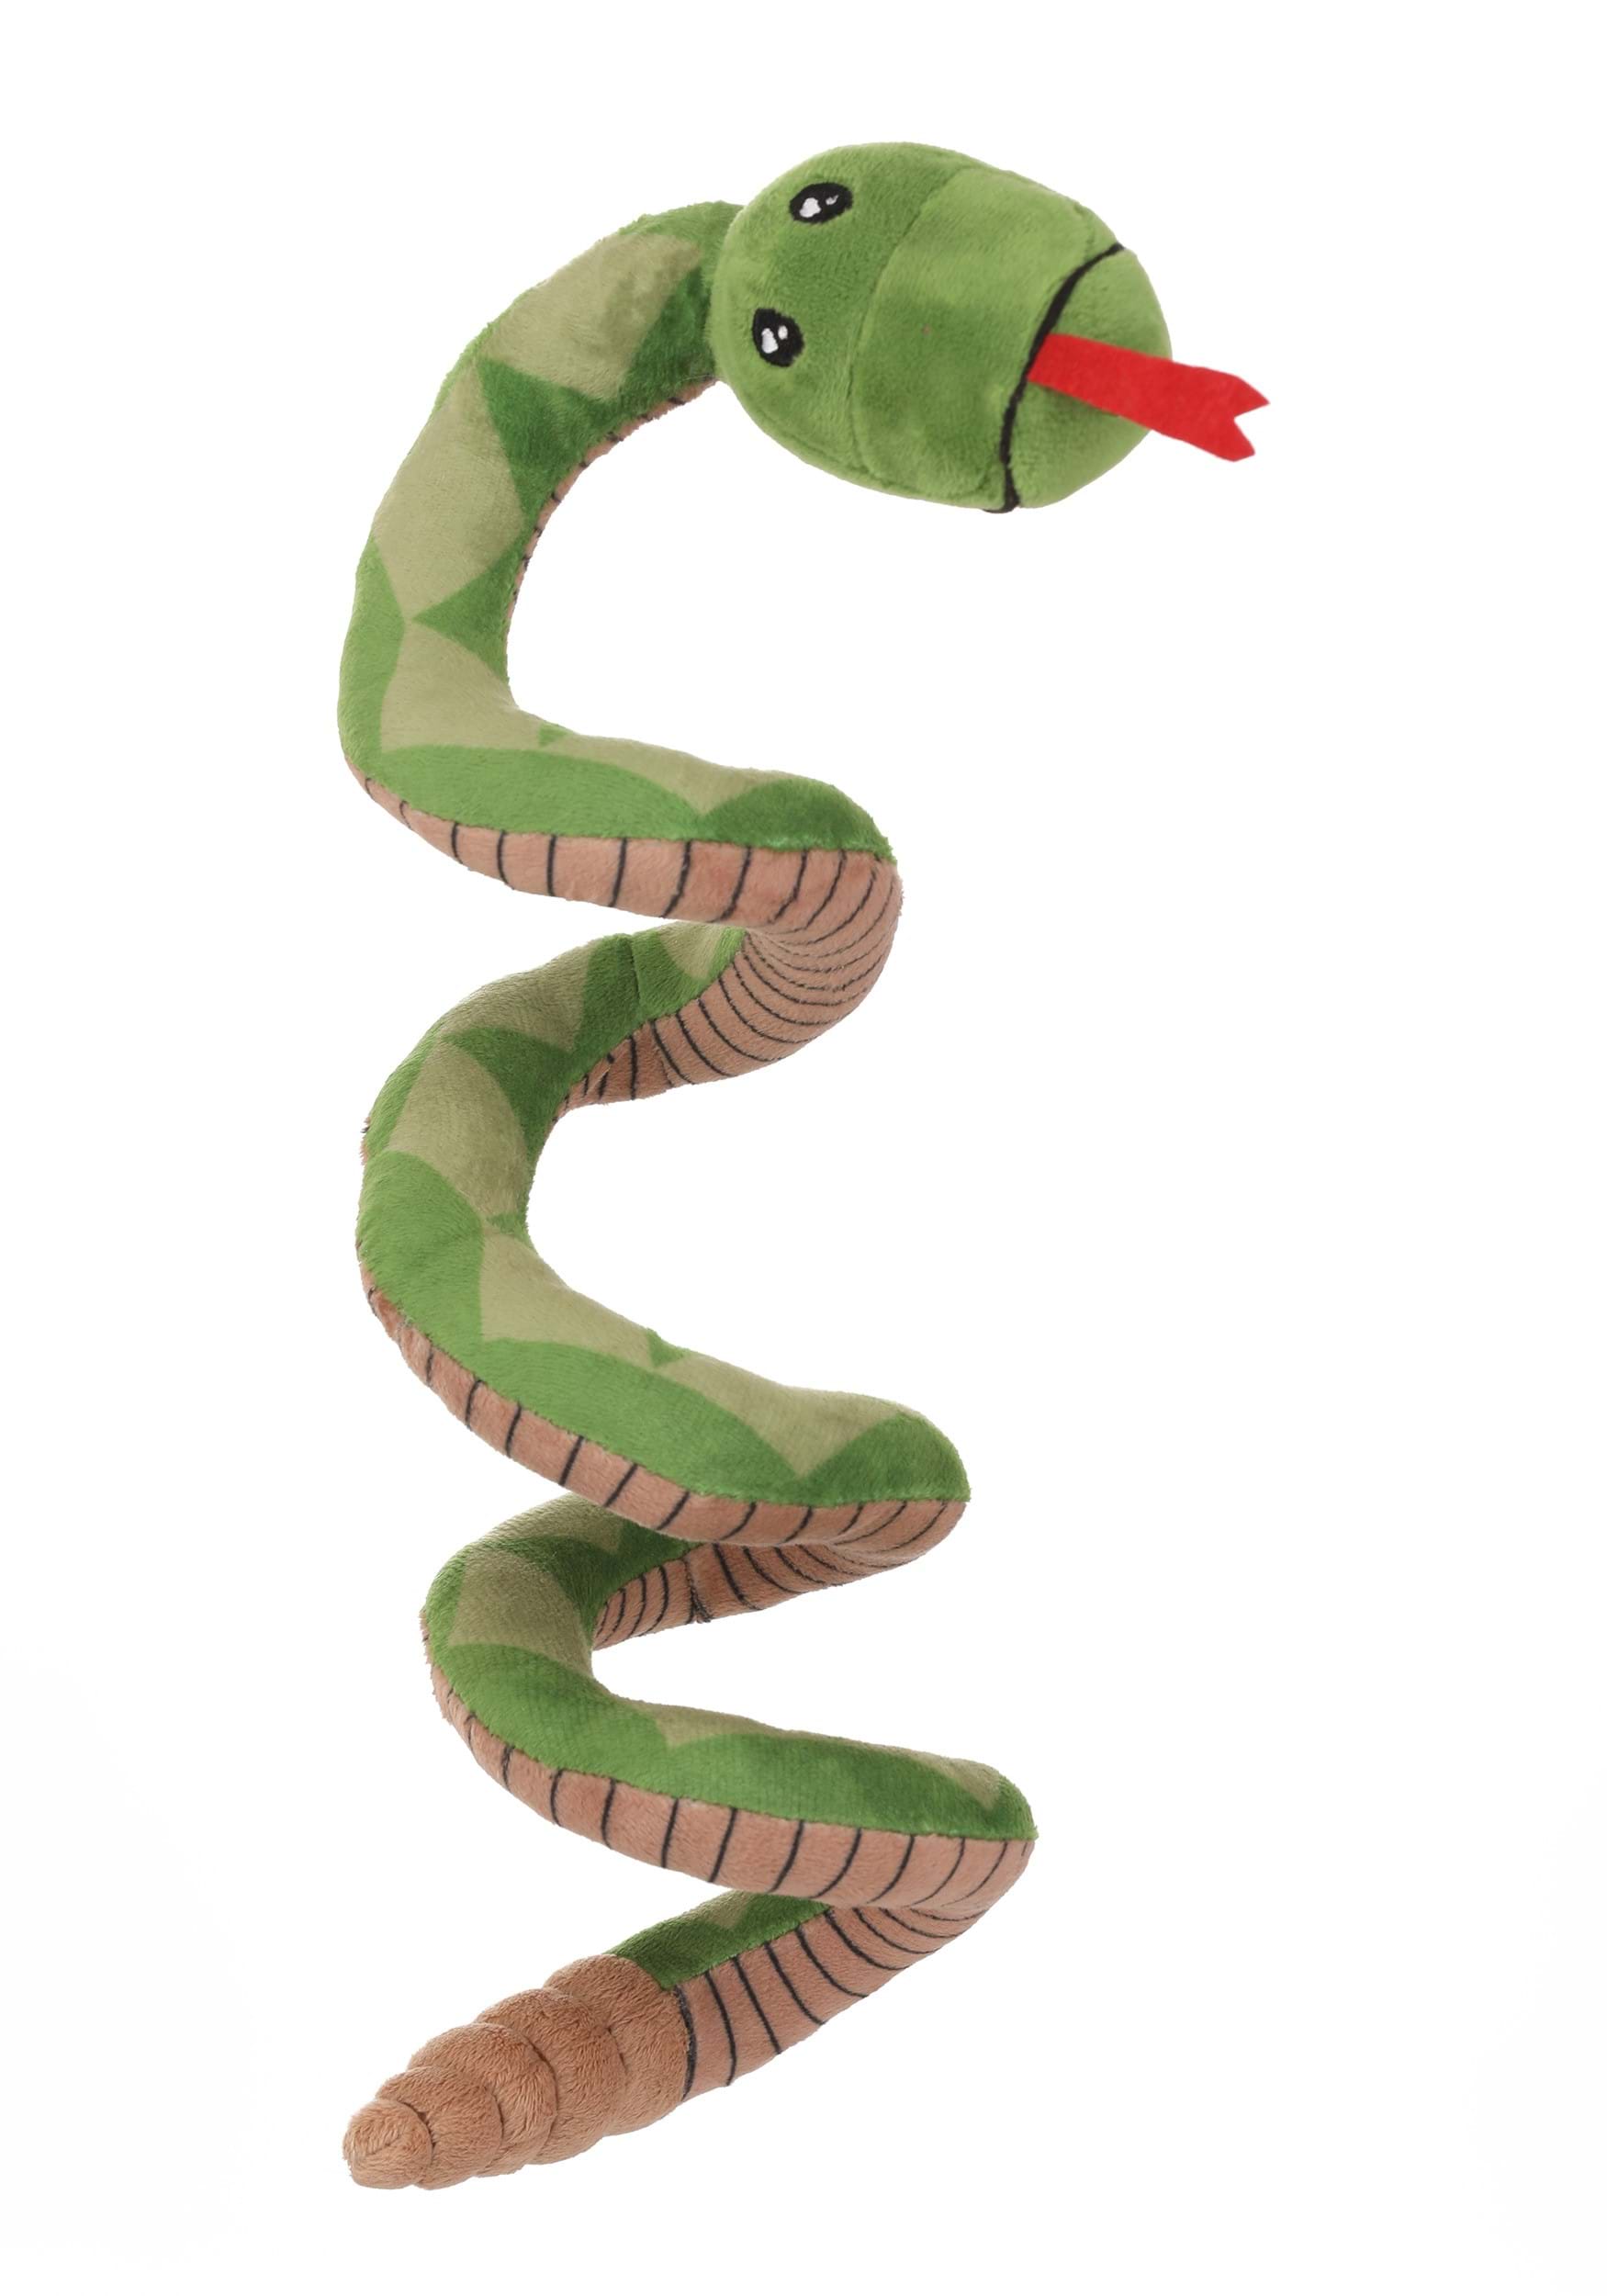 Twisty Tails Snake Toy